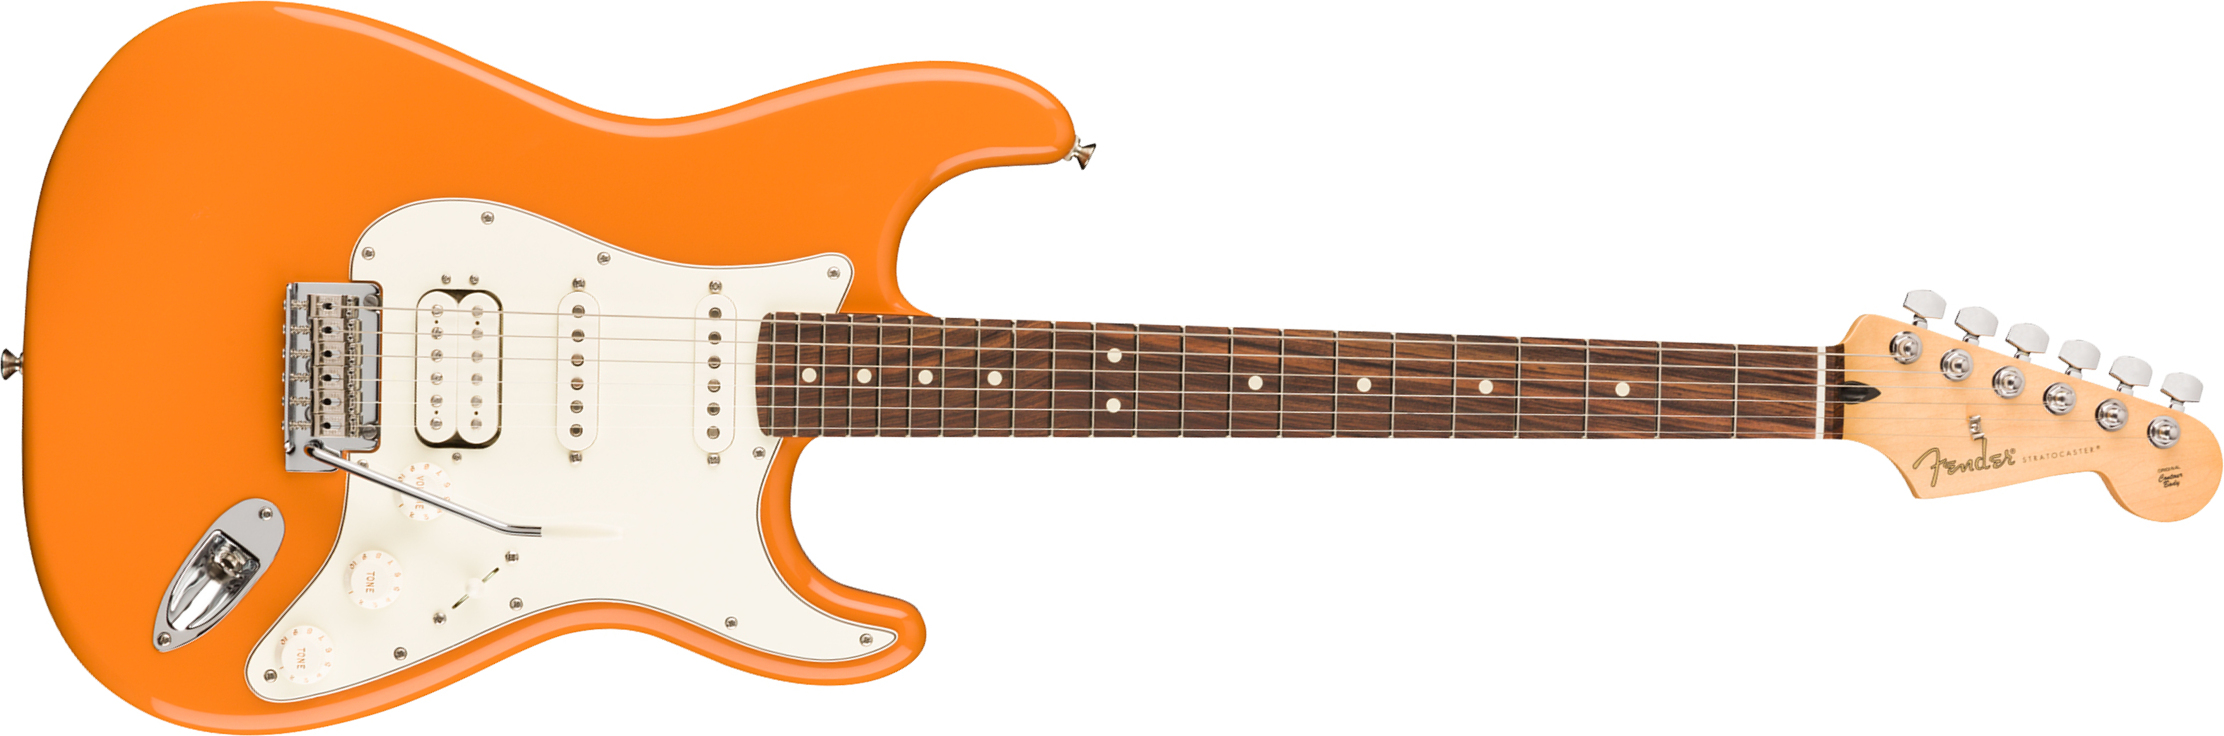 Fender Strat Player Mex Hss Pf - Capri Orange - Str shape electric guitar - Main picture